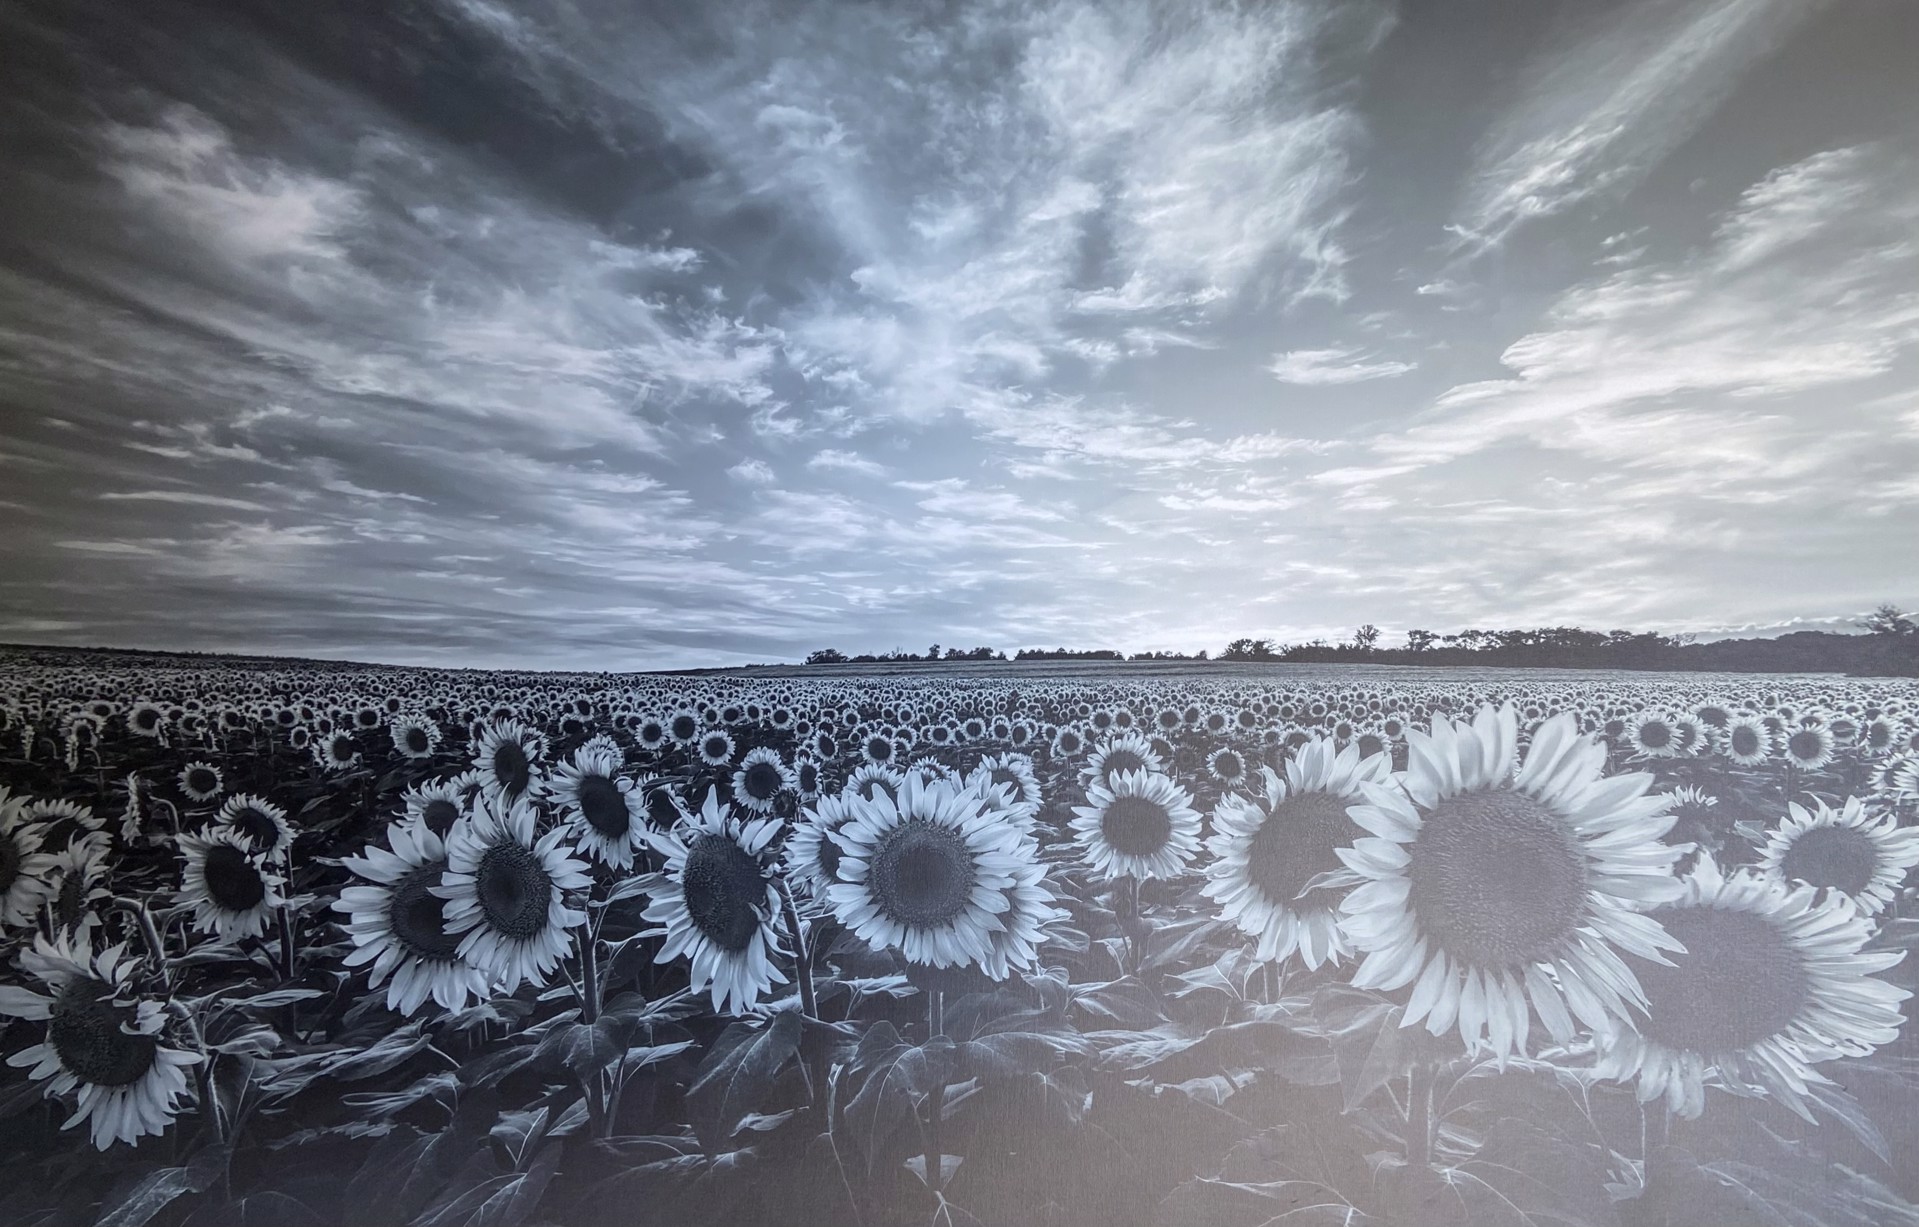 Sunflowers by Scott Bean